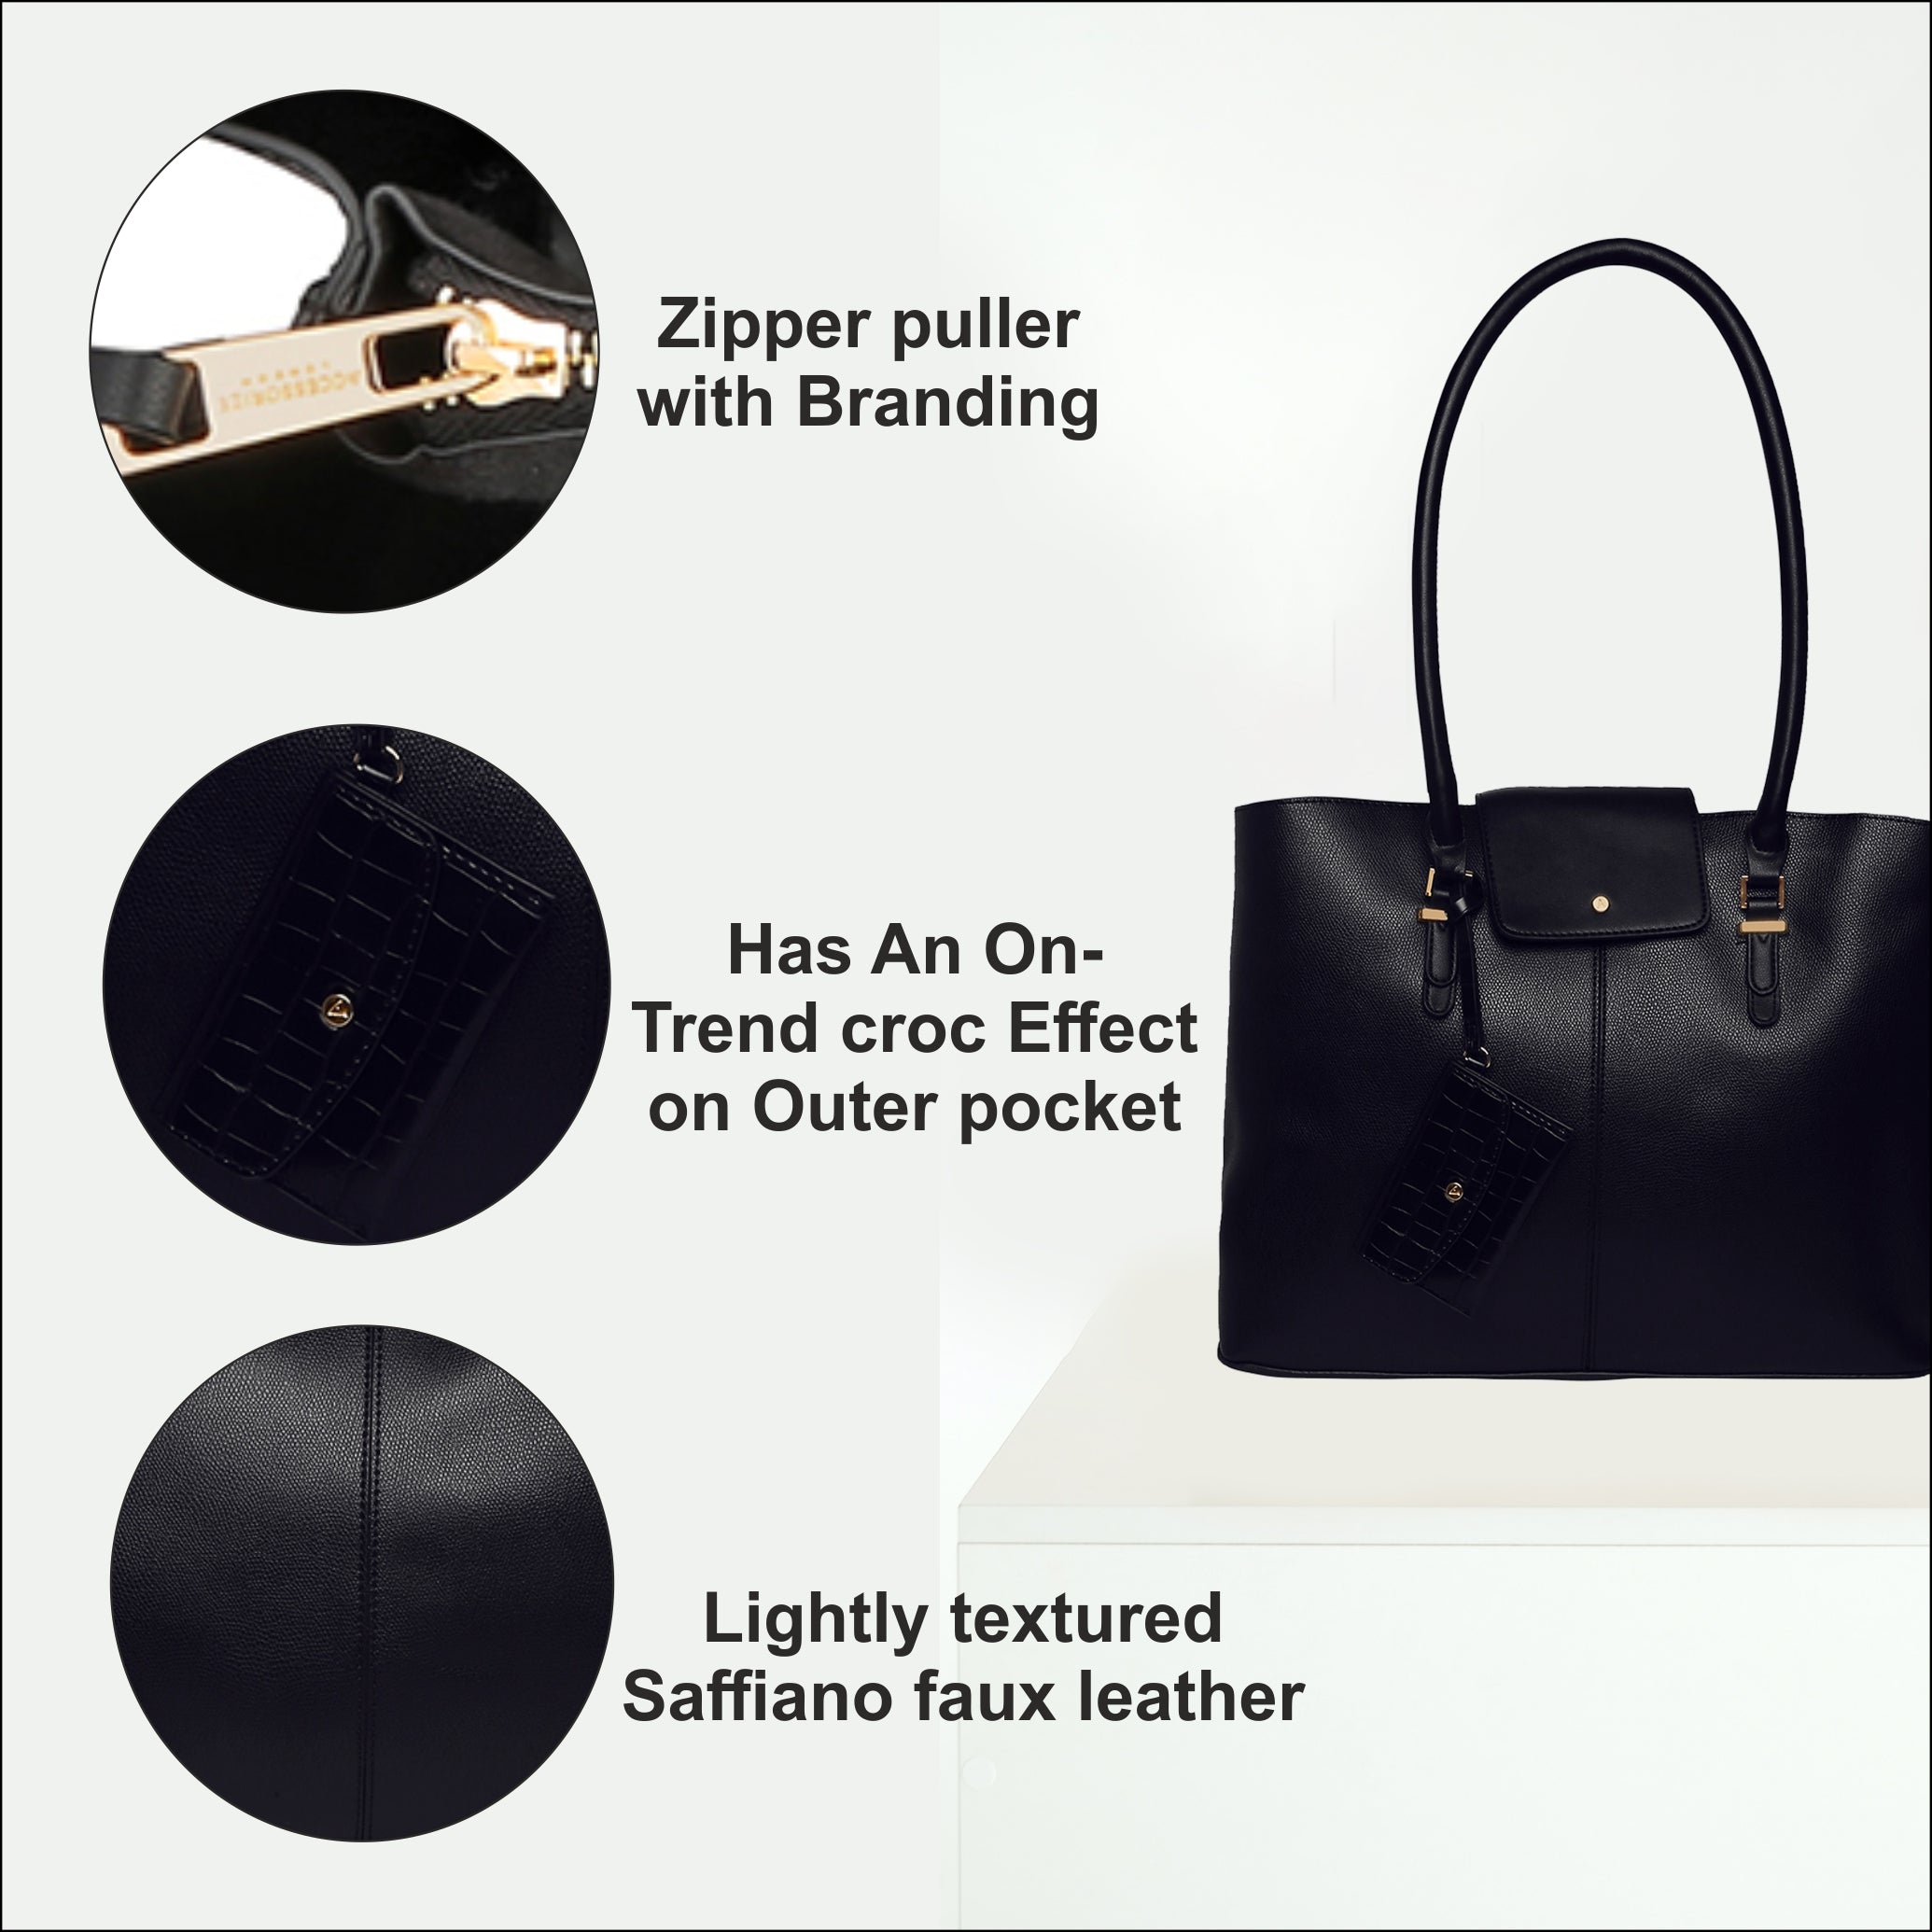 Accessorize London Women's Faux Leather Black Heather Tote Bag